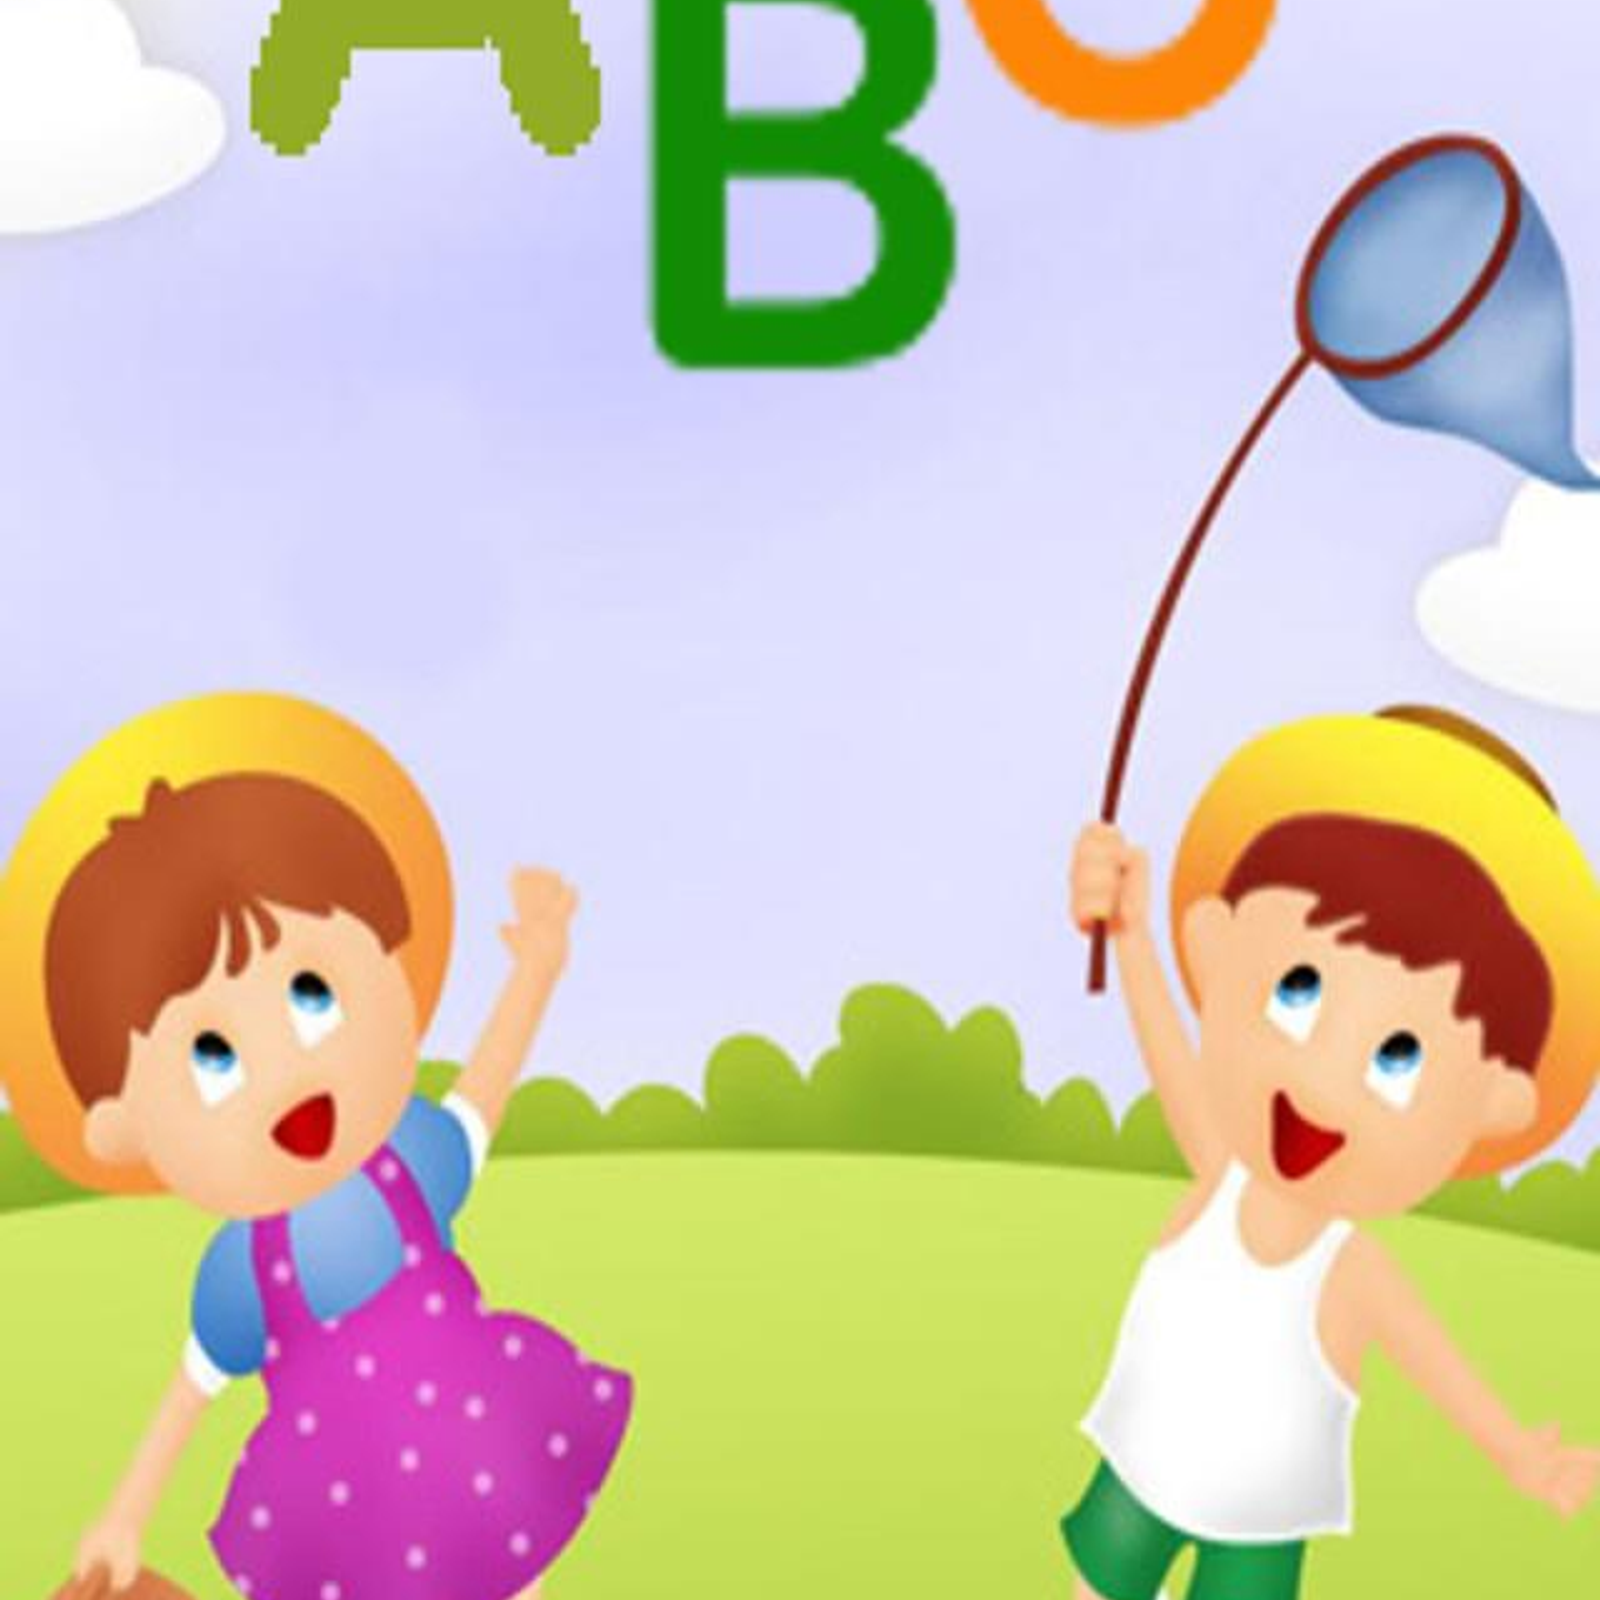 alphabet games matching Similar Abcdefghijklmnopqrstuvwxyz Apps Alternatives and